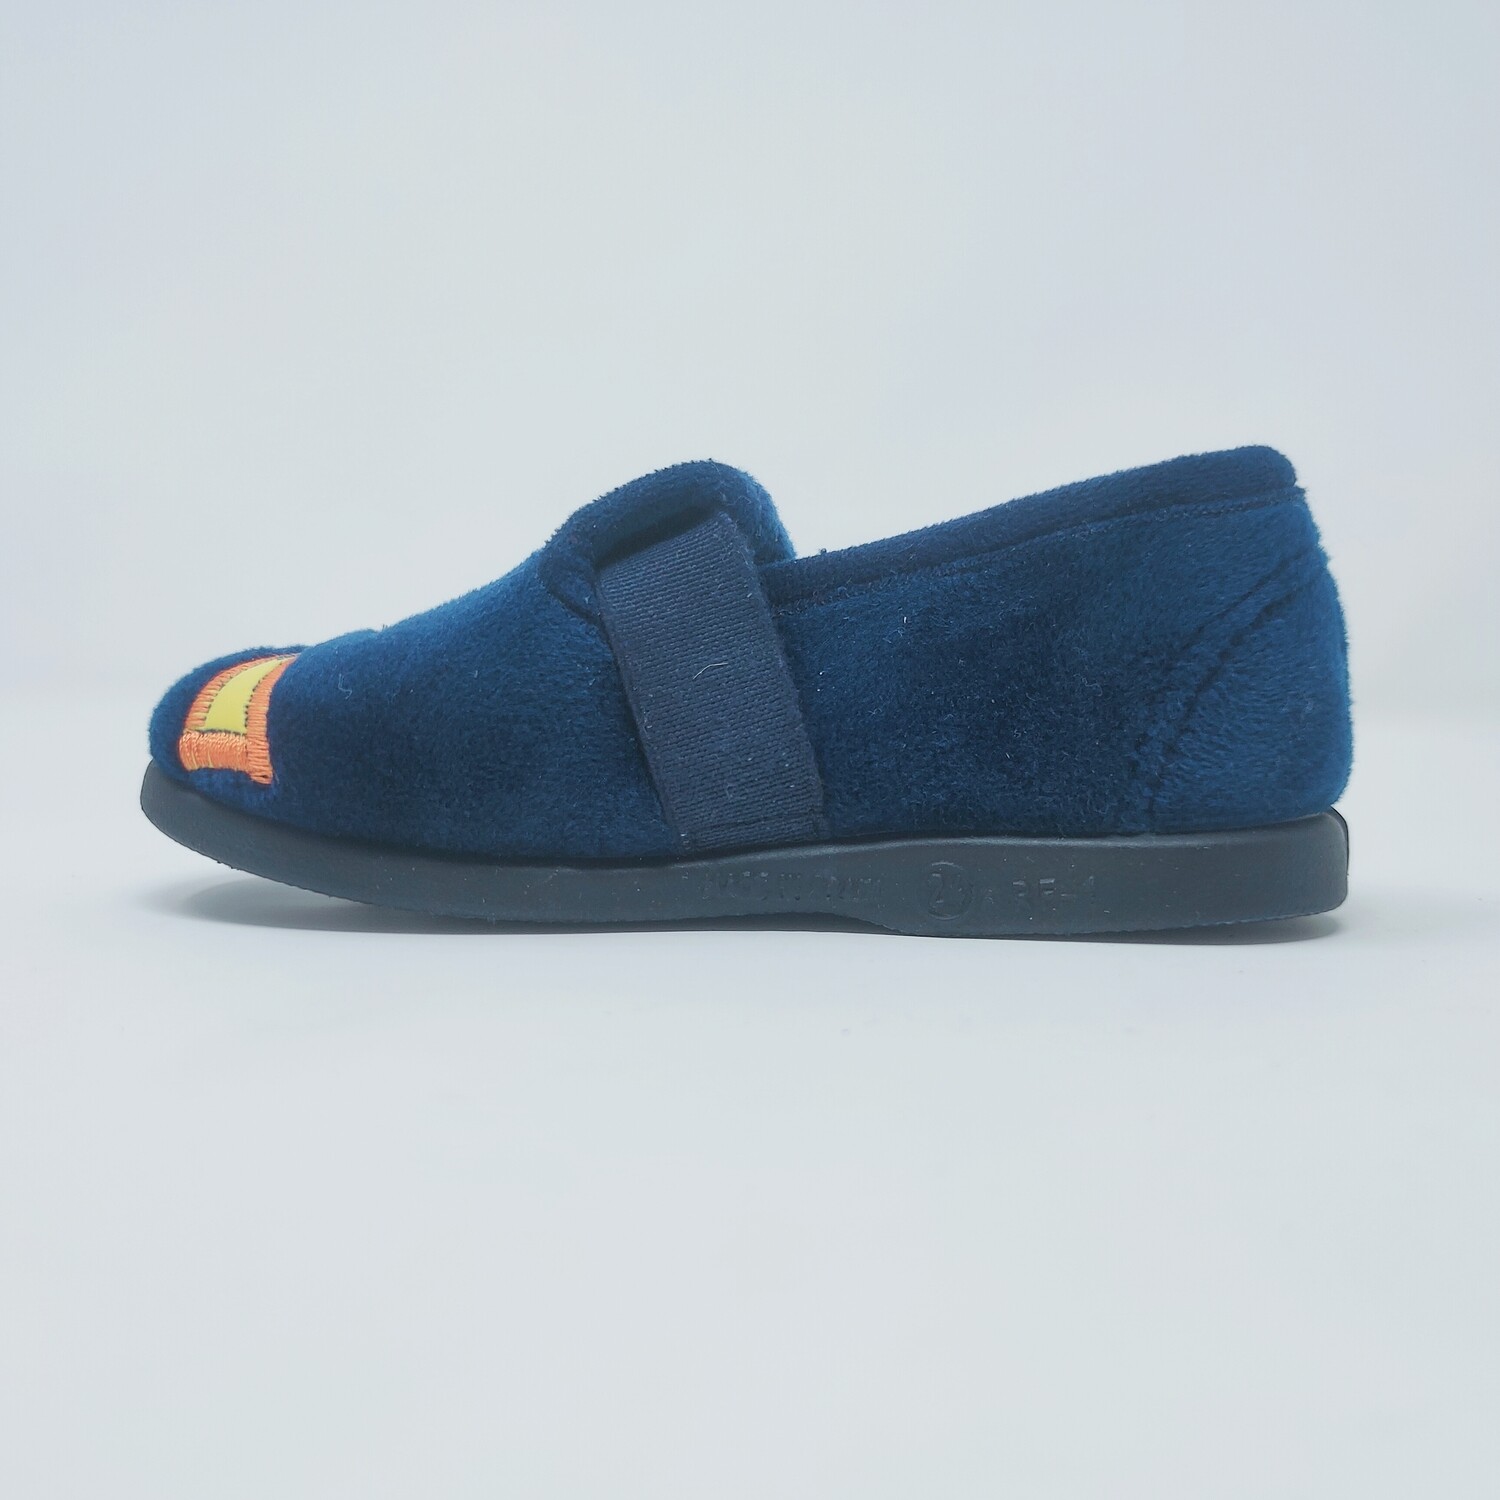 Chaussures Cienta Bleu - Taille 23